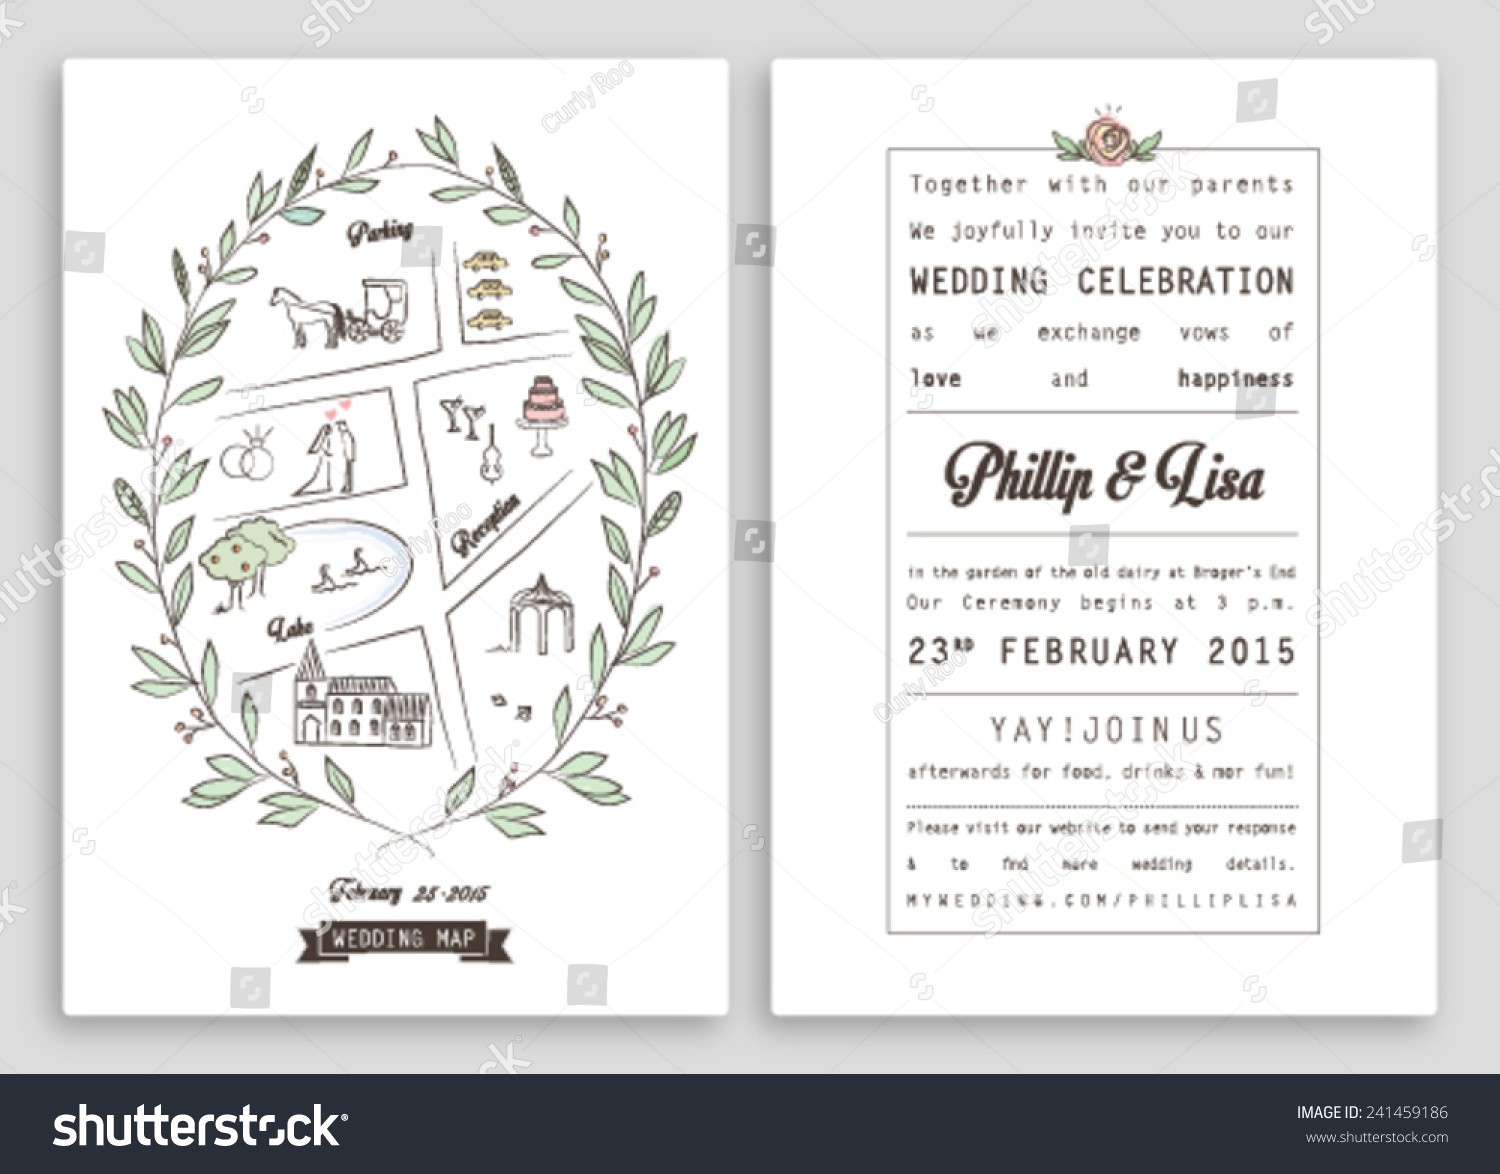 Wedding invitation design layout